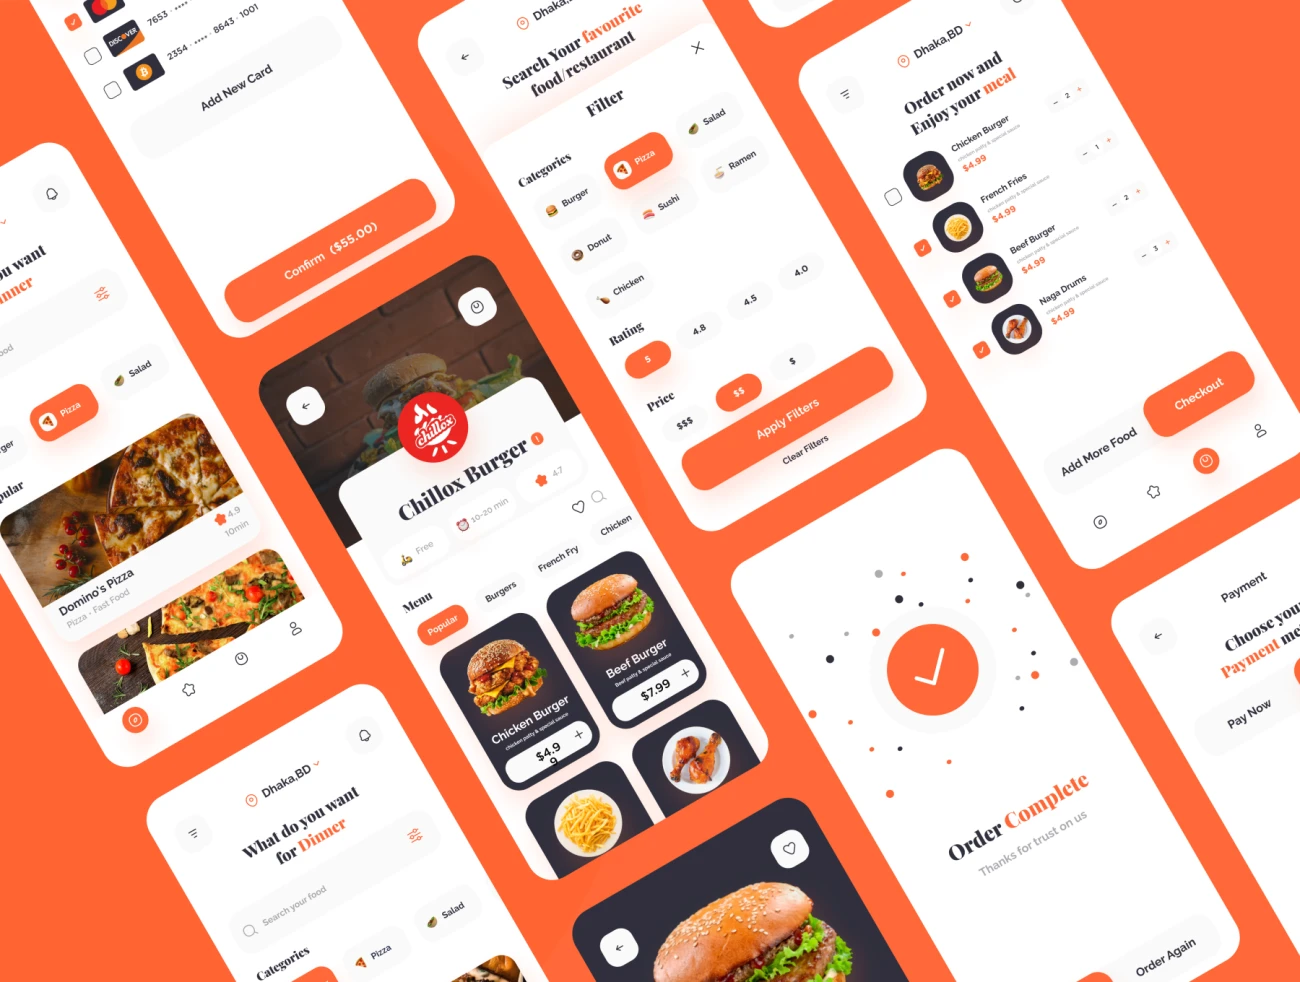 20屏外卖点餐送餐应用设计套件 Ideate Food Delivery App Ui KIt插图7